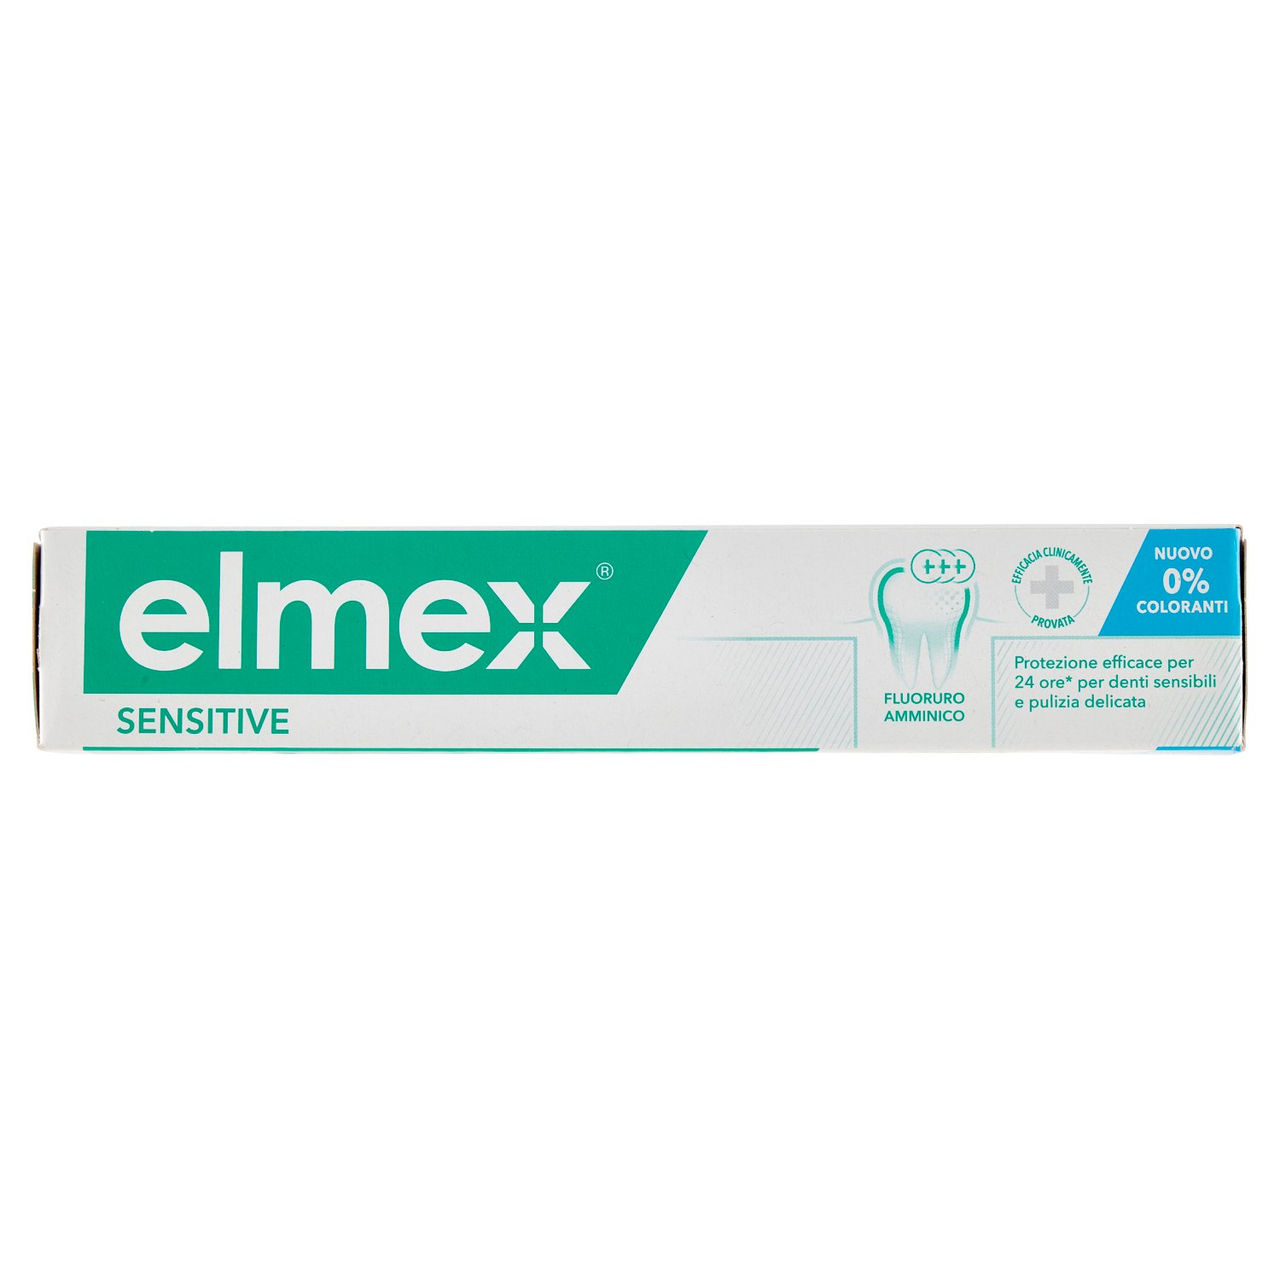 Elmex Dentifricio Sensitive in vendita online